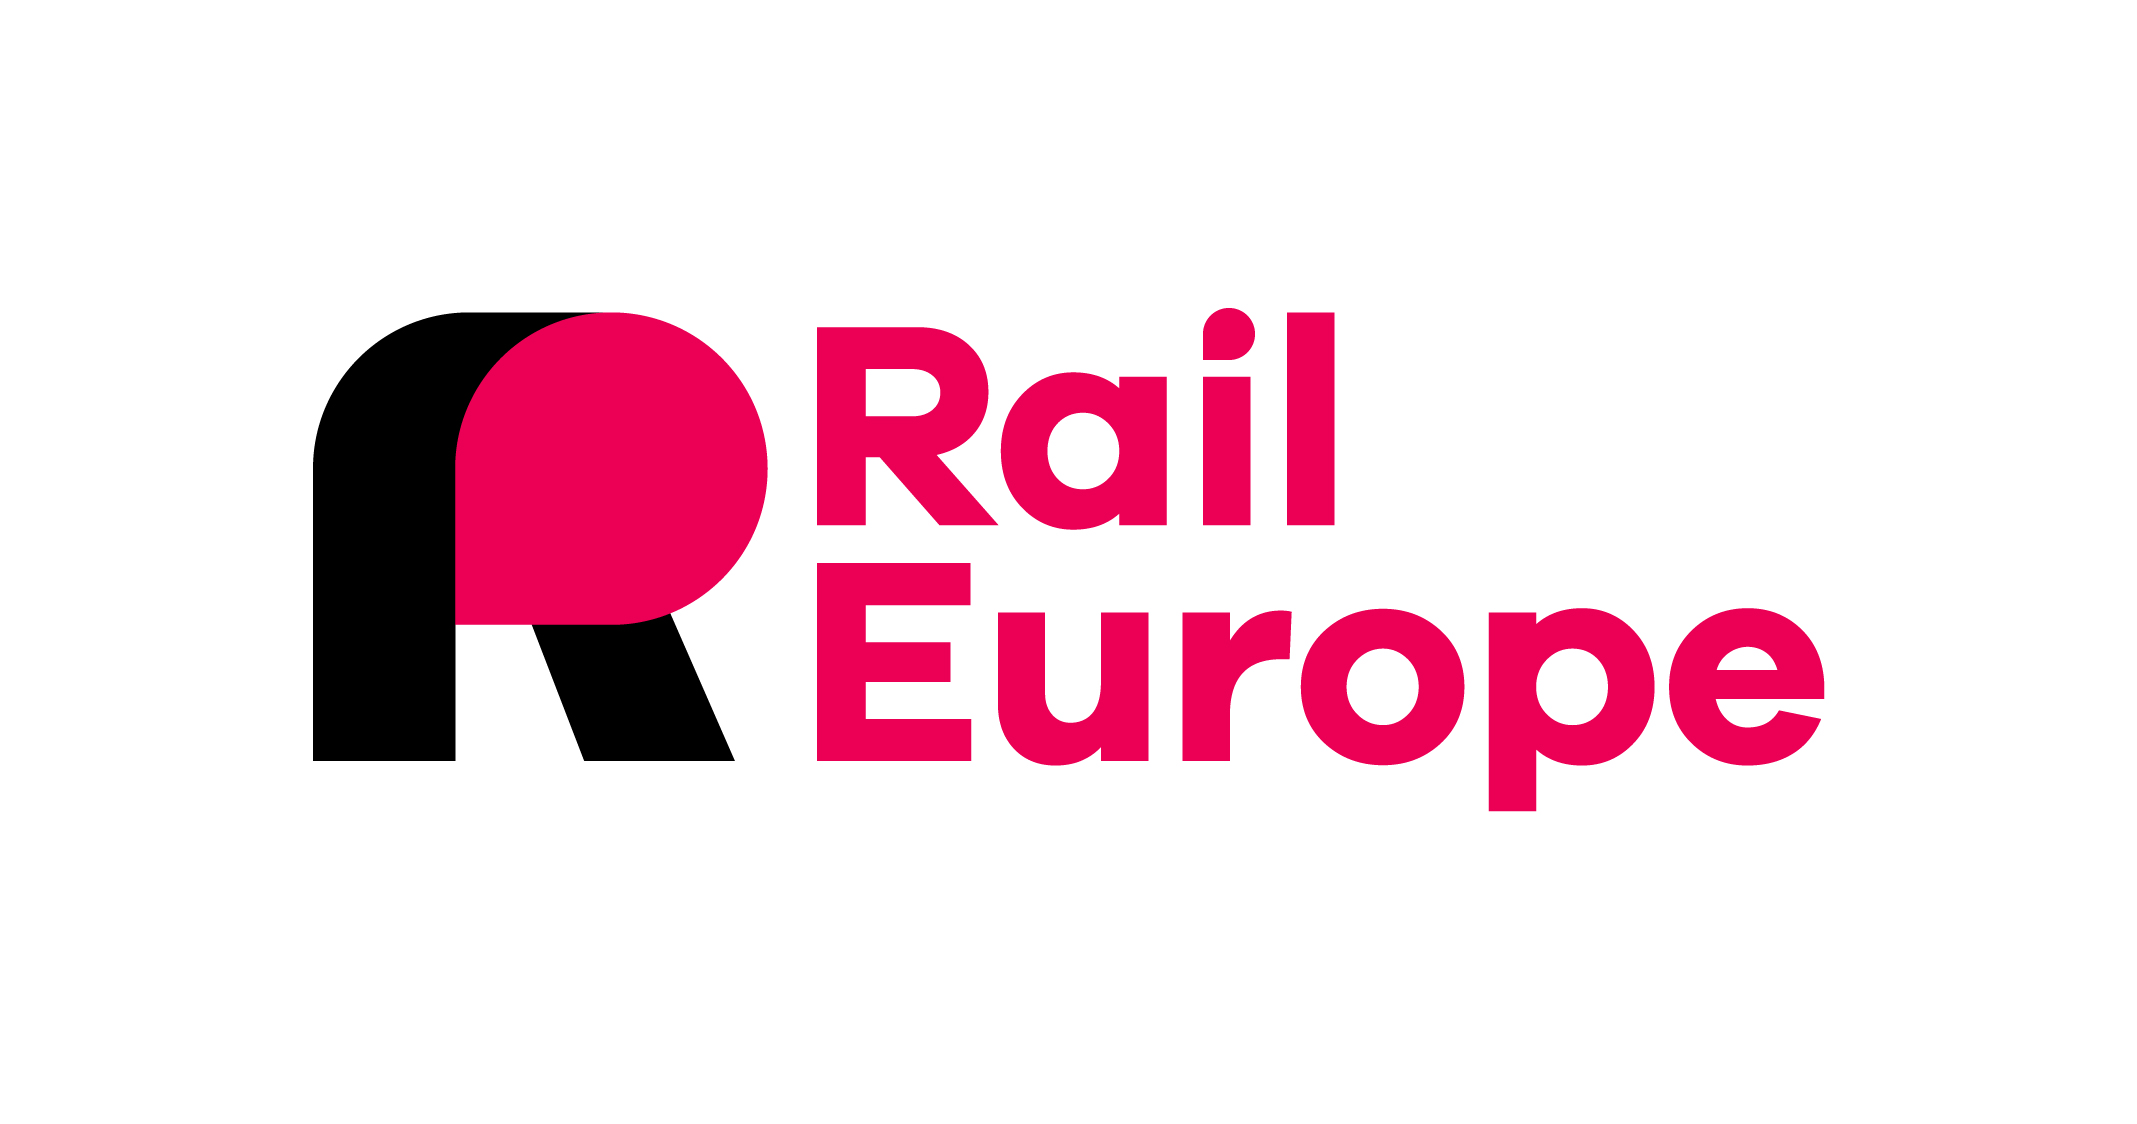 Rail europe